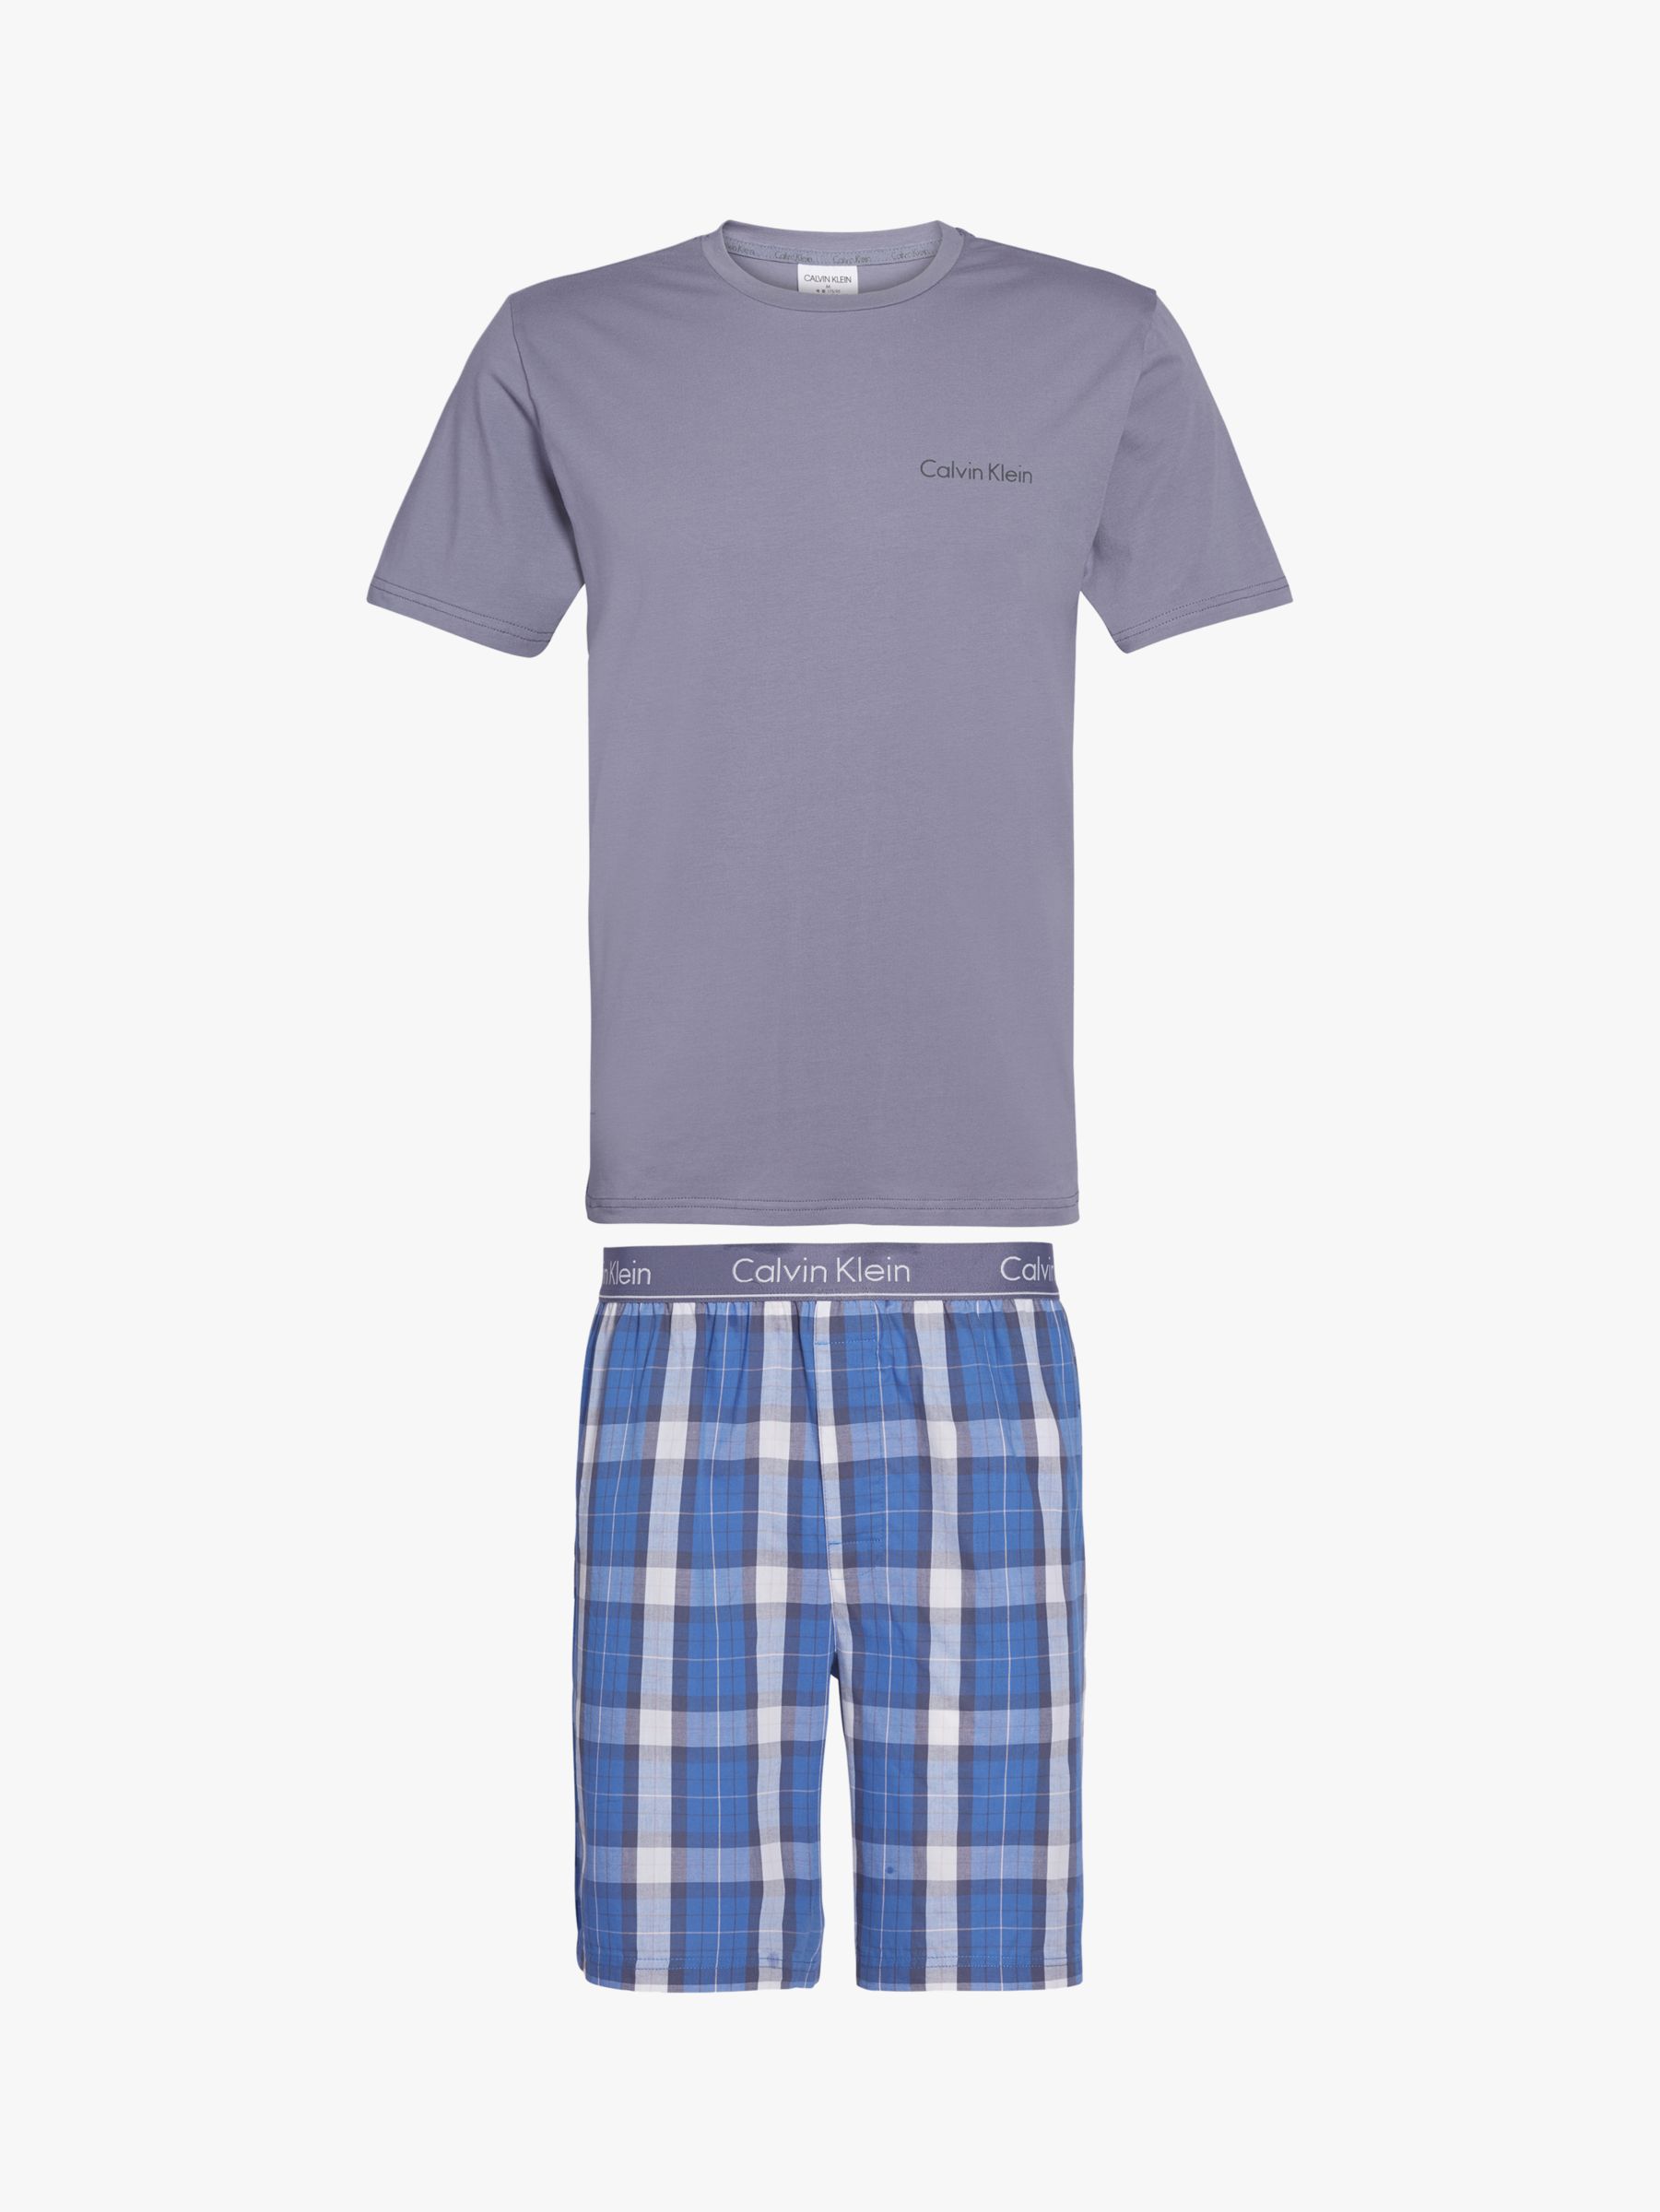 Calvin Klein Check Pyjama Set, Blue